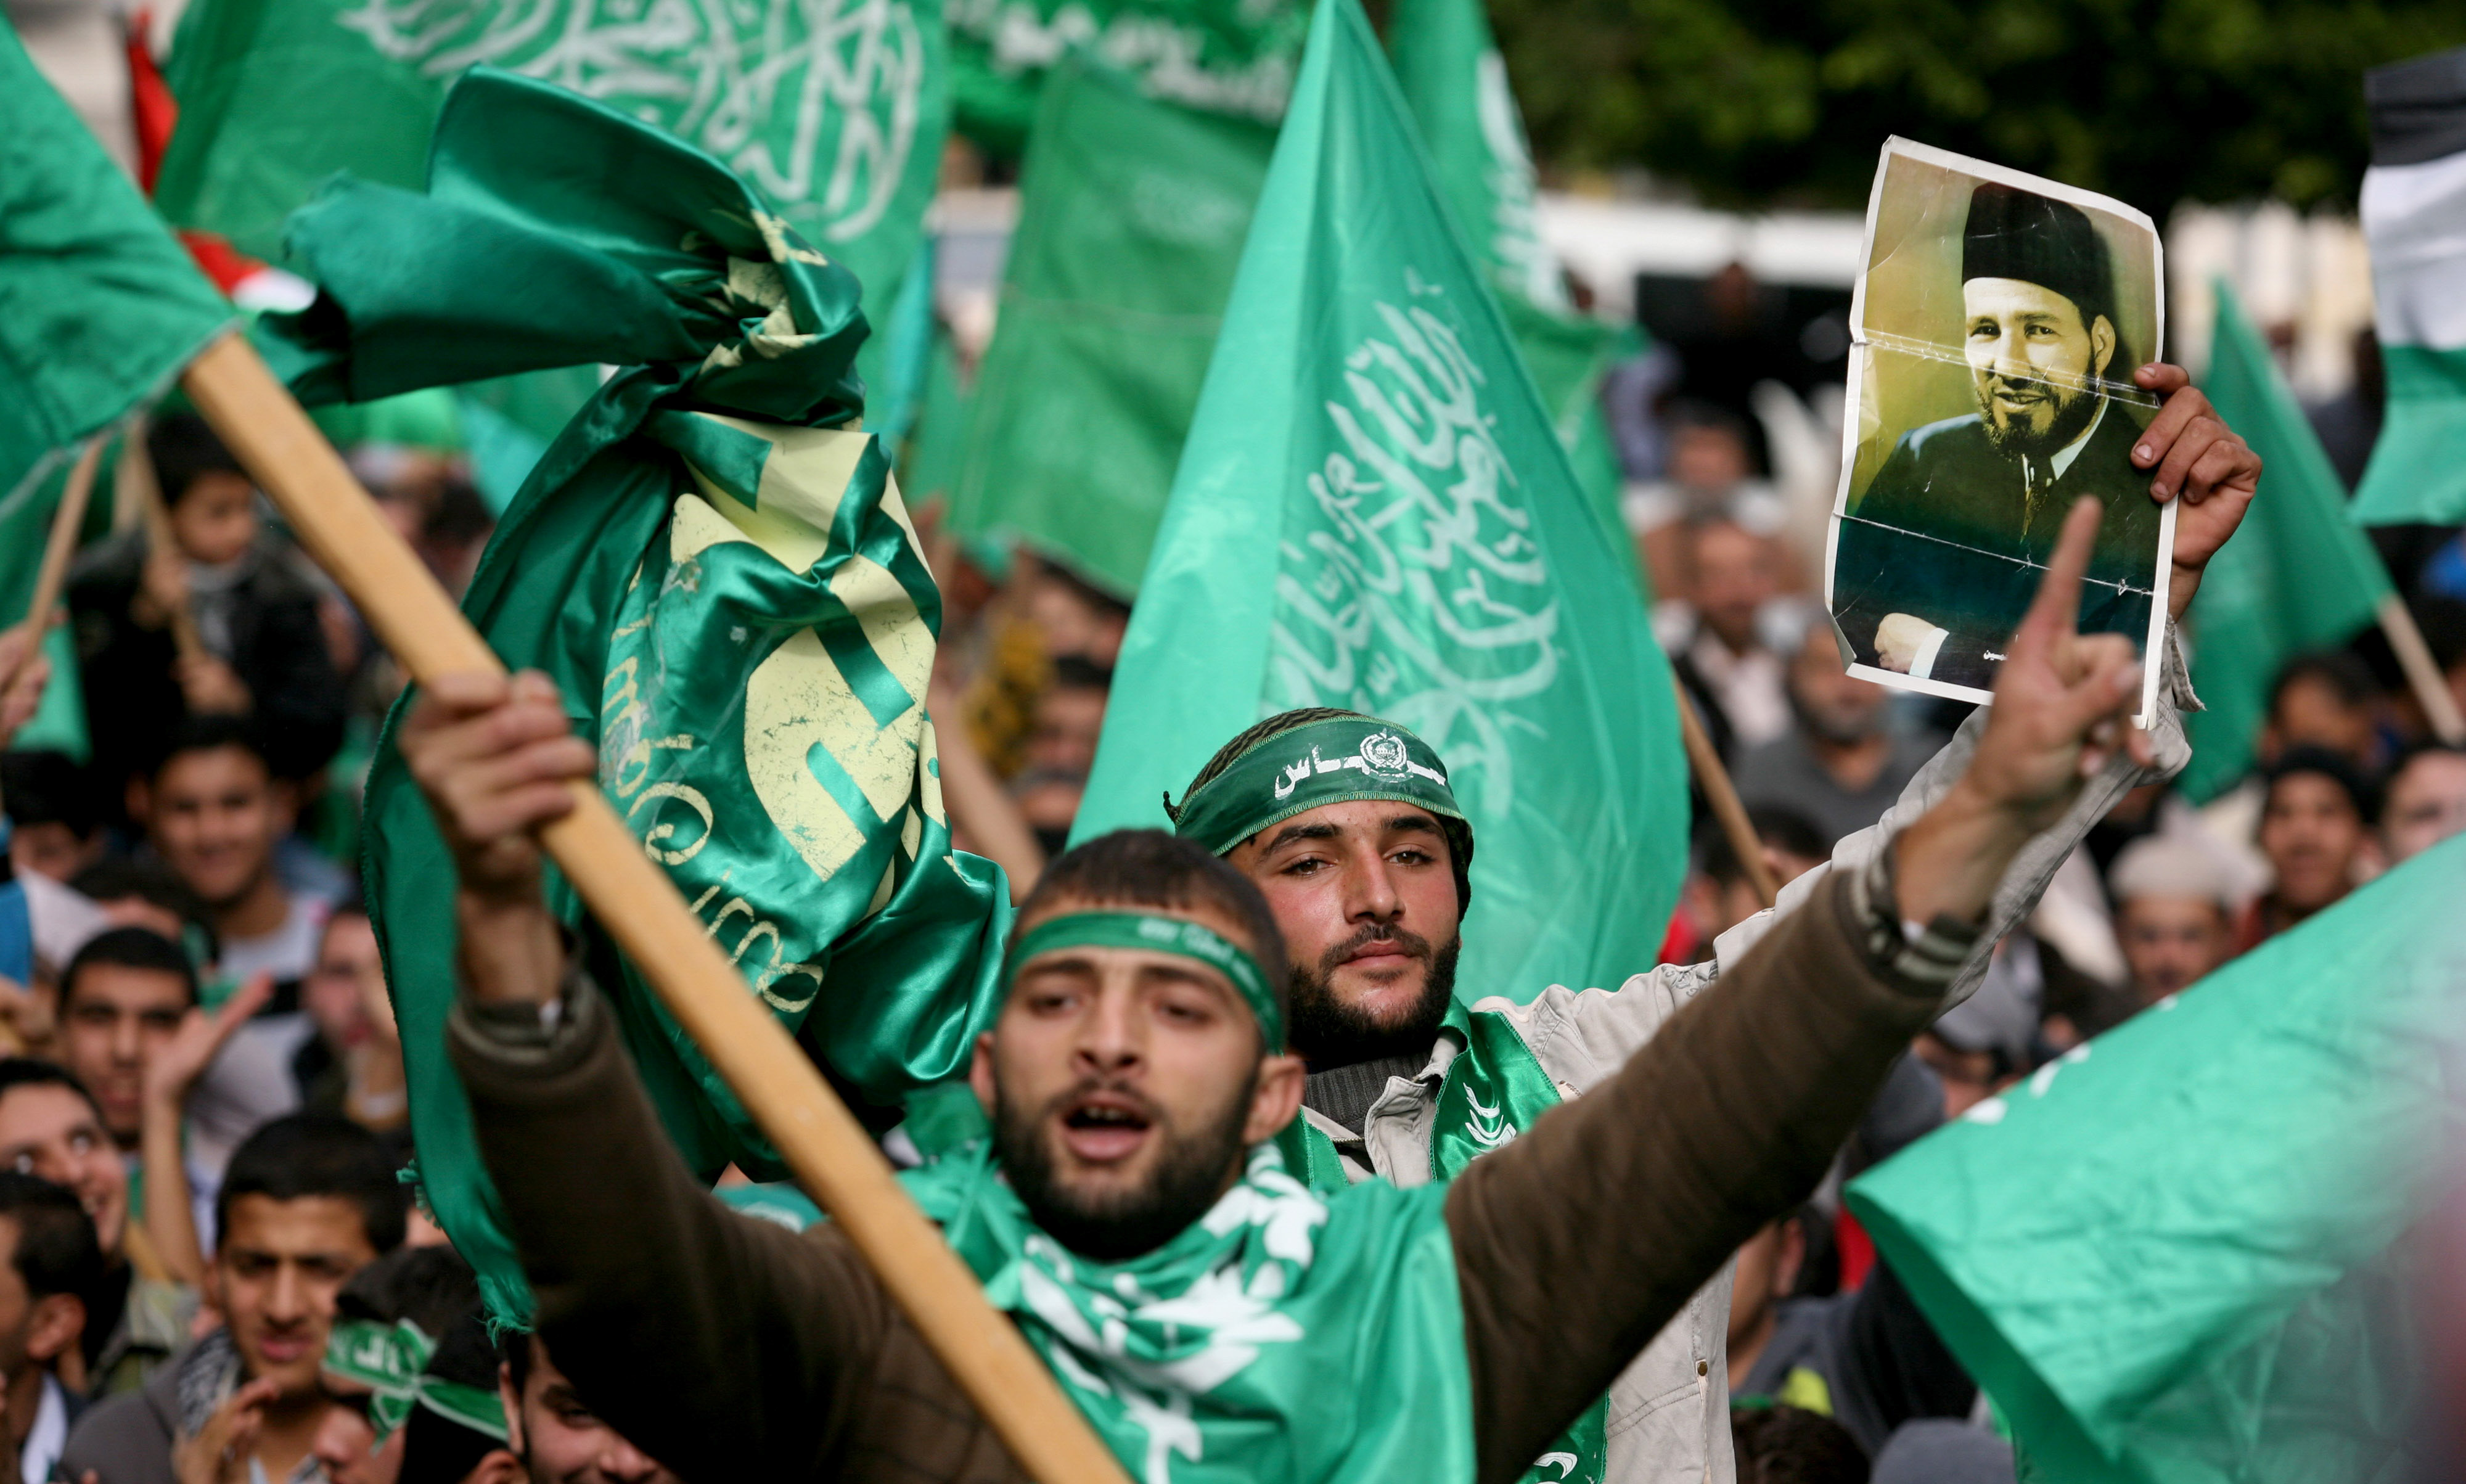 Muslim Brotherhood creates a breeding ground for terrorism in Europe